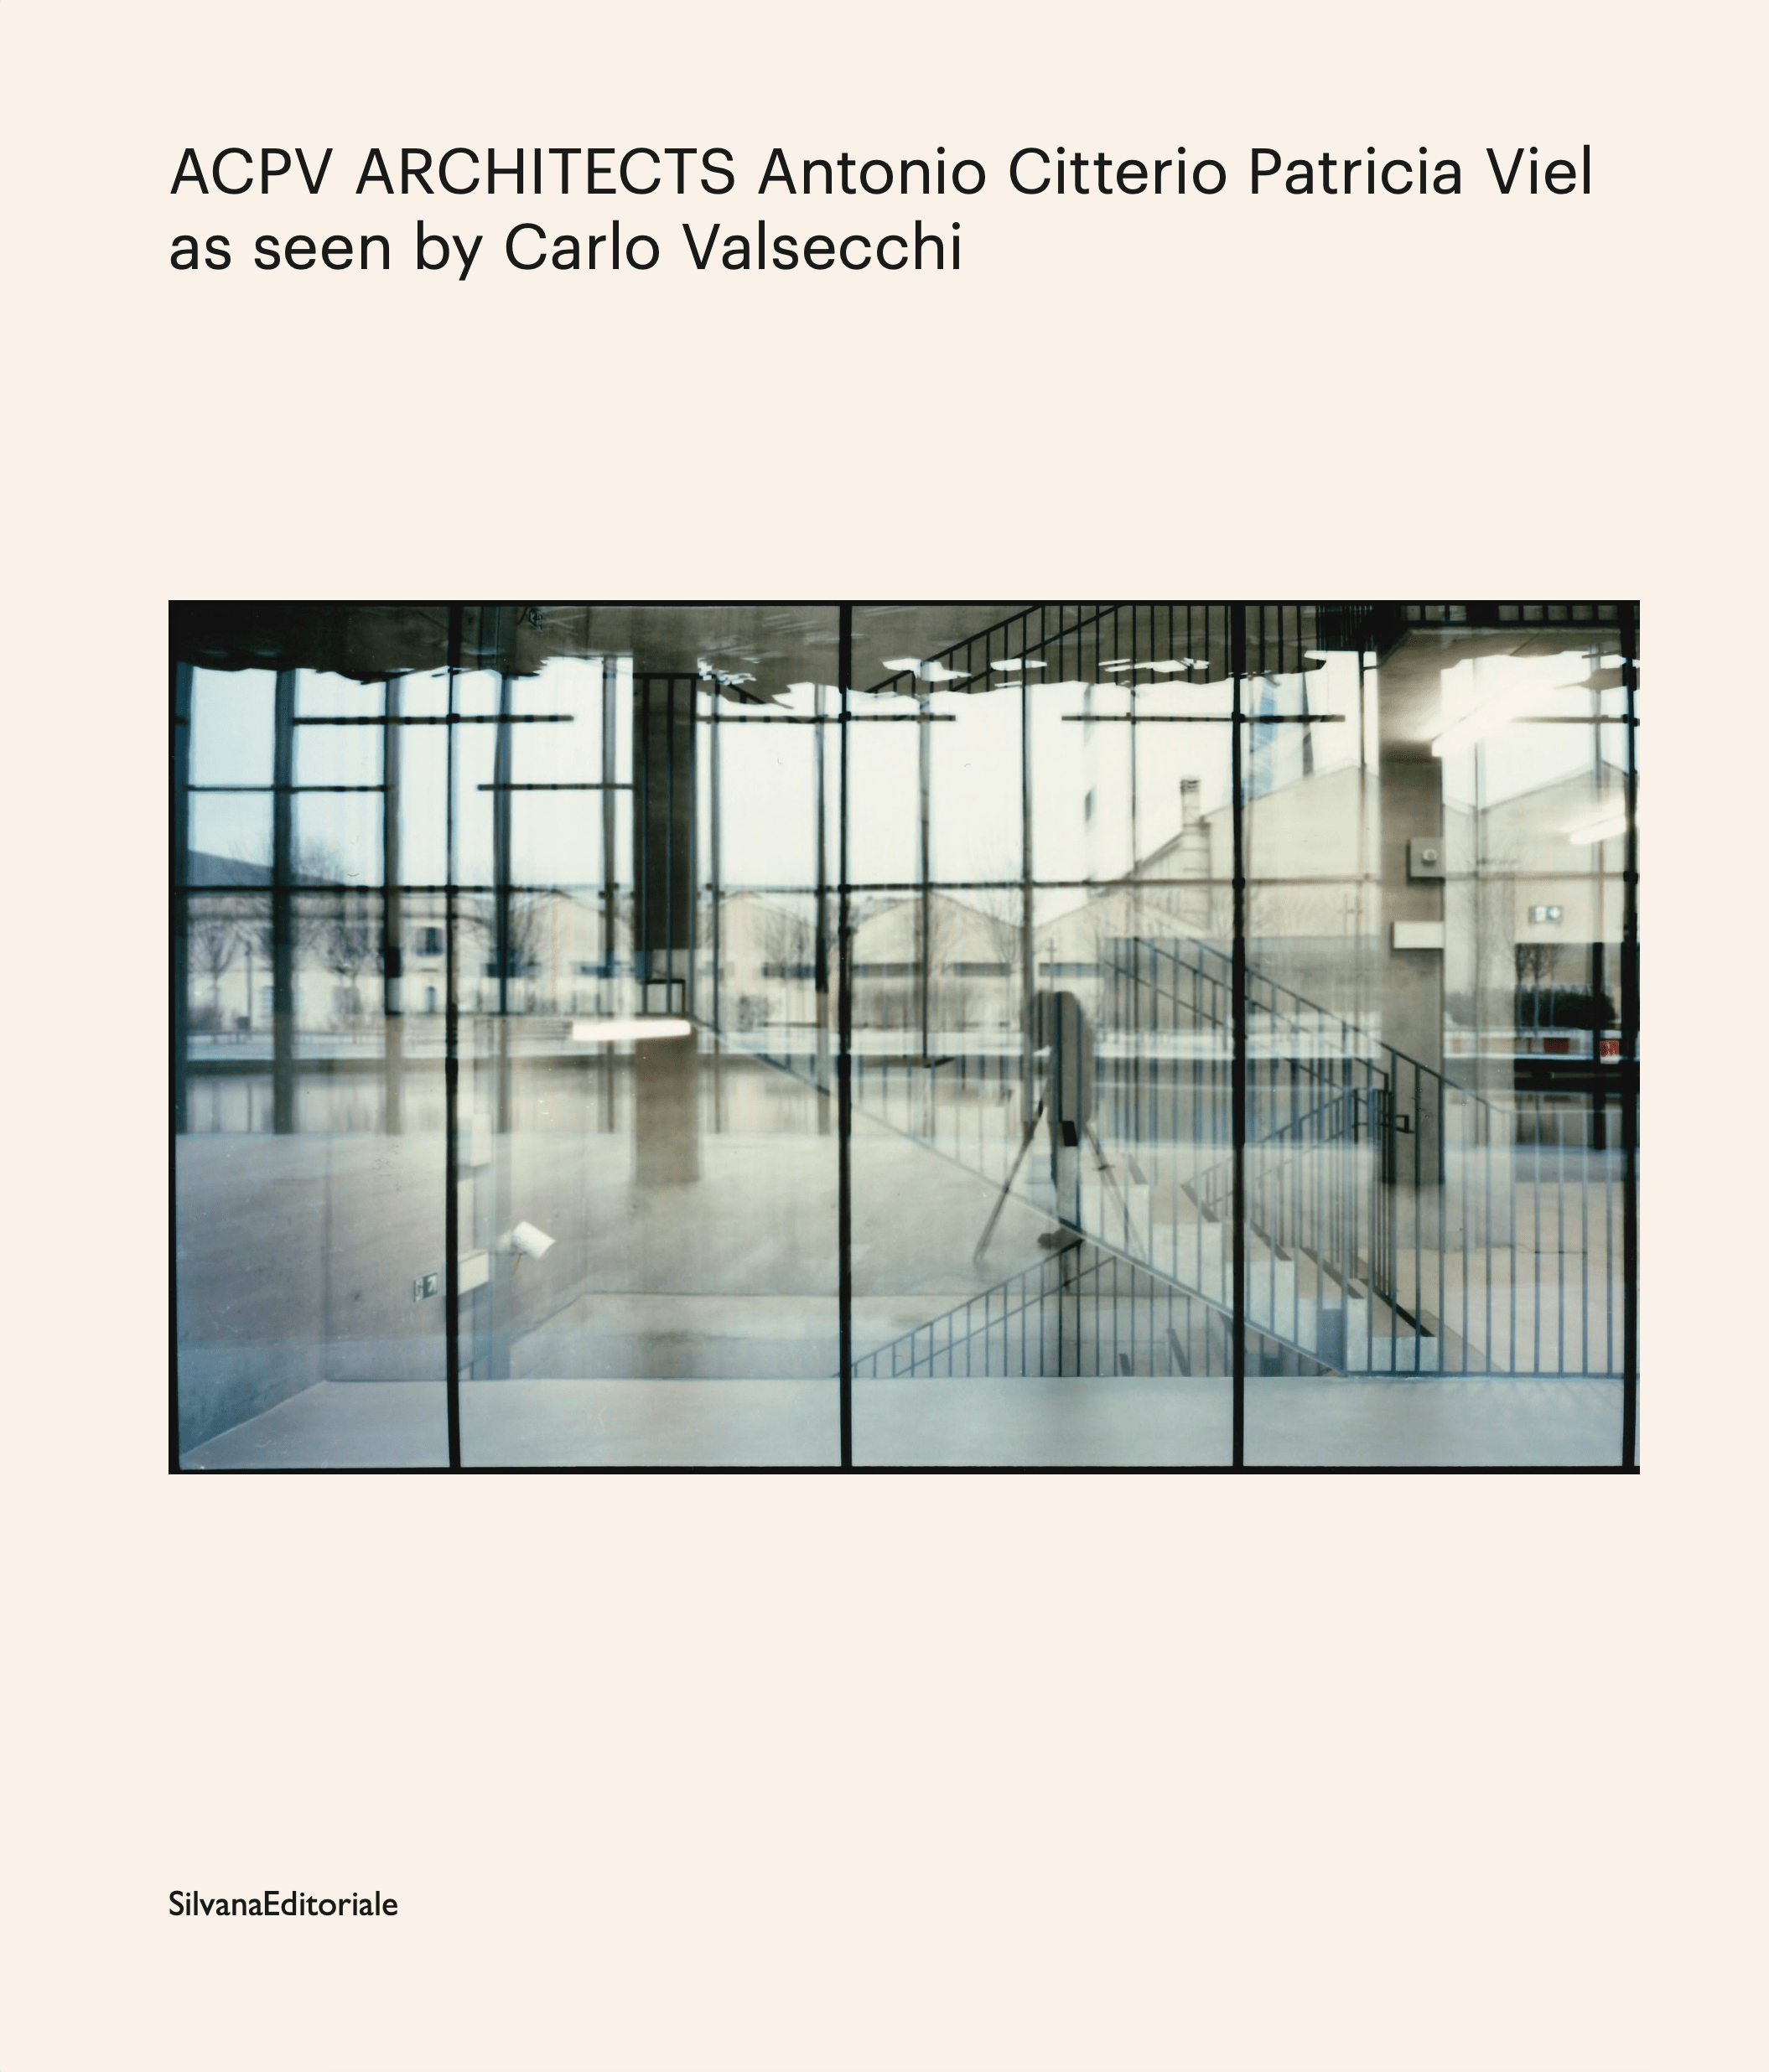 Cover_ACPV ARCHITECTS_Carlo Valsecchi-min.png